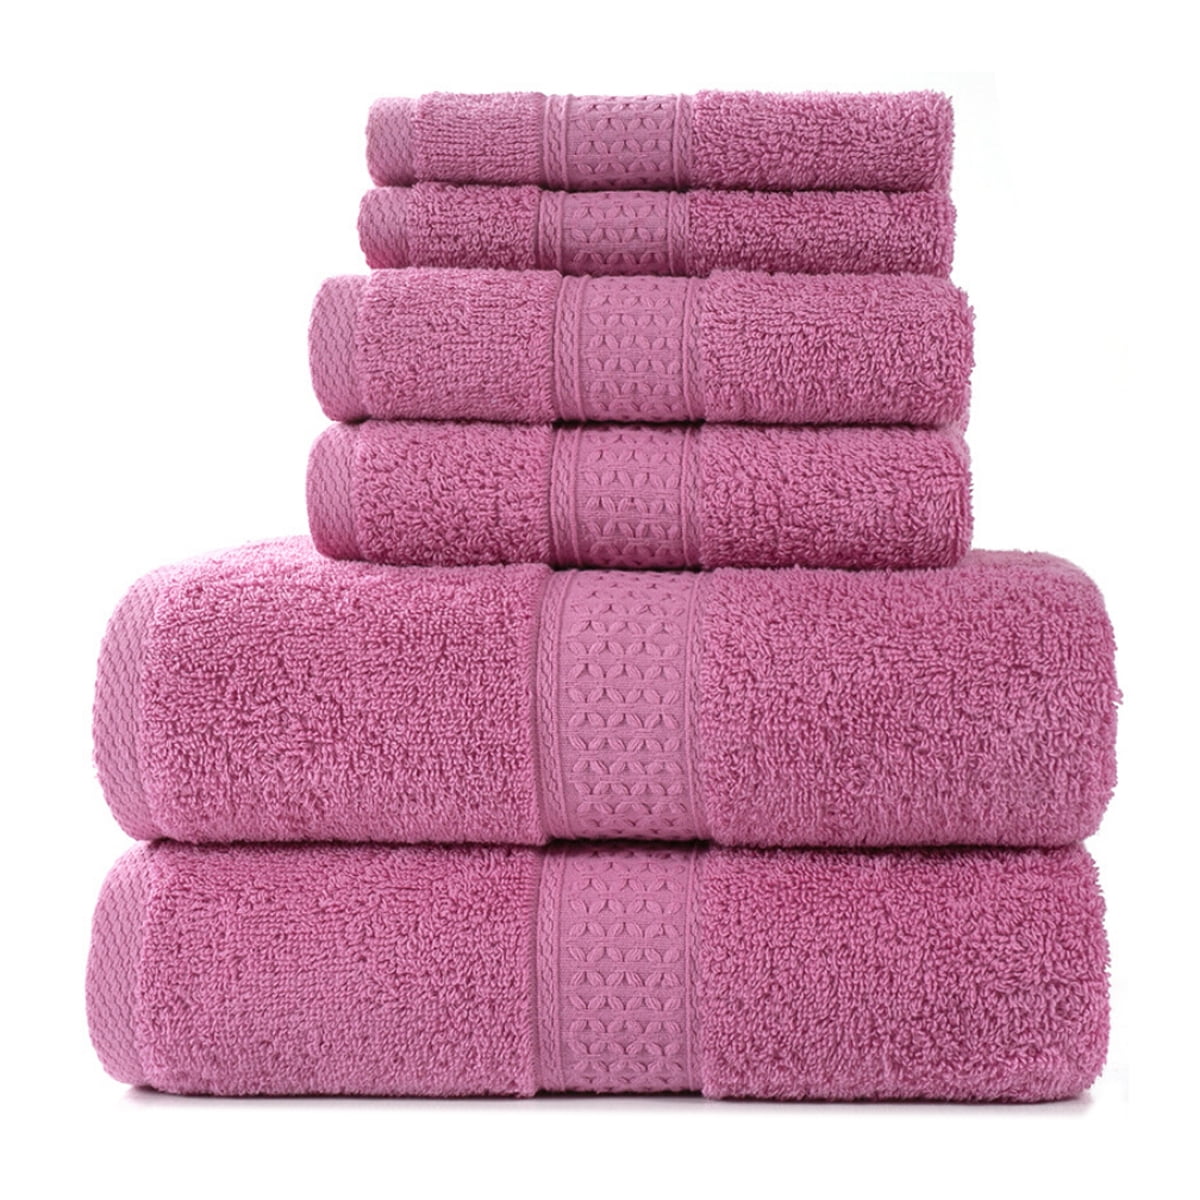 Details about   1 Pc Thick Towel Set Modern Solid Color Cotton Bath Towels Bathroom Hand Face Sh 